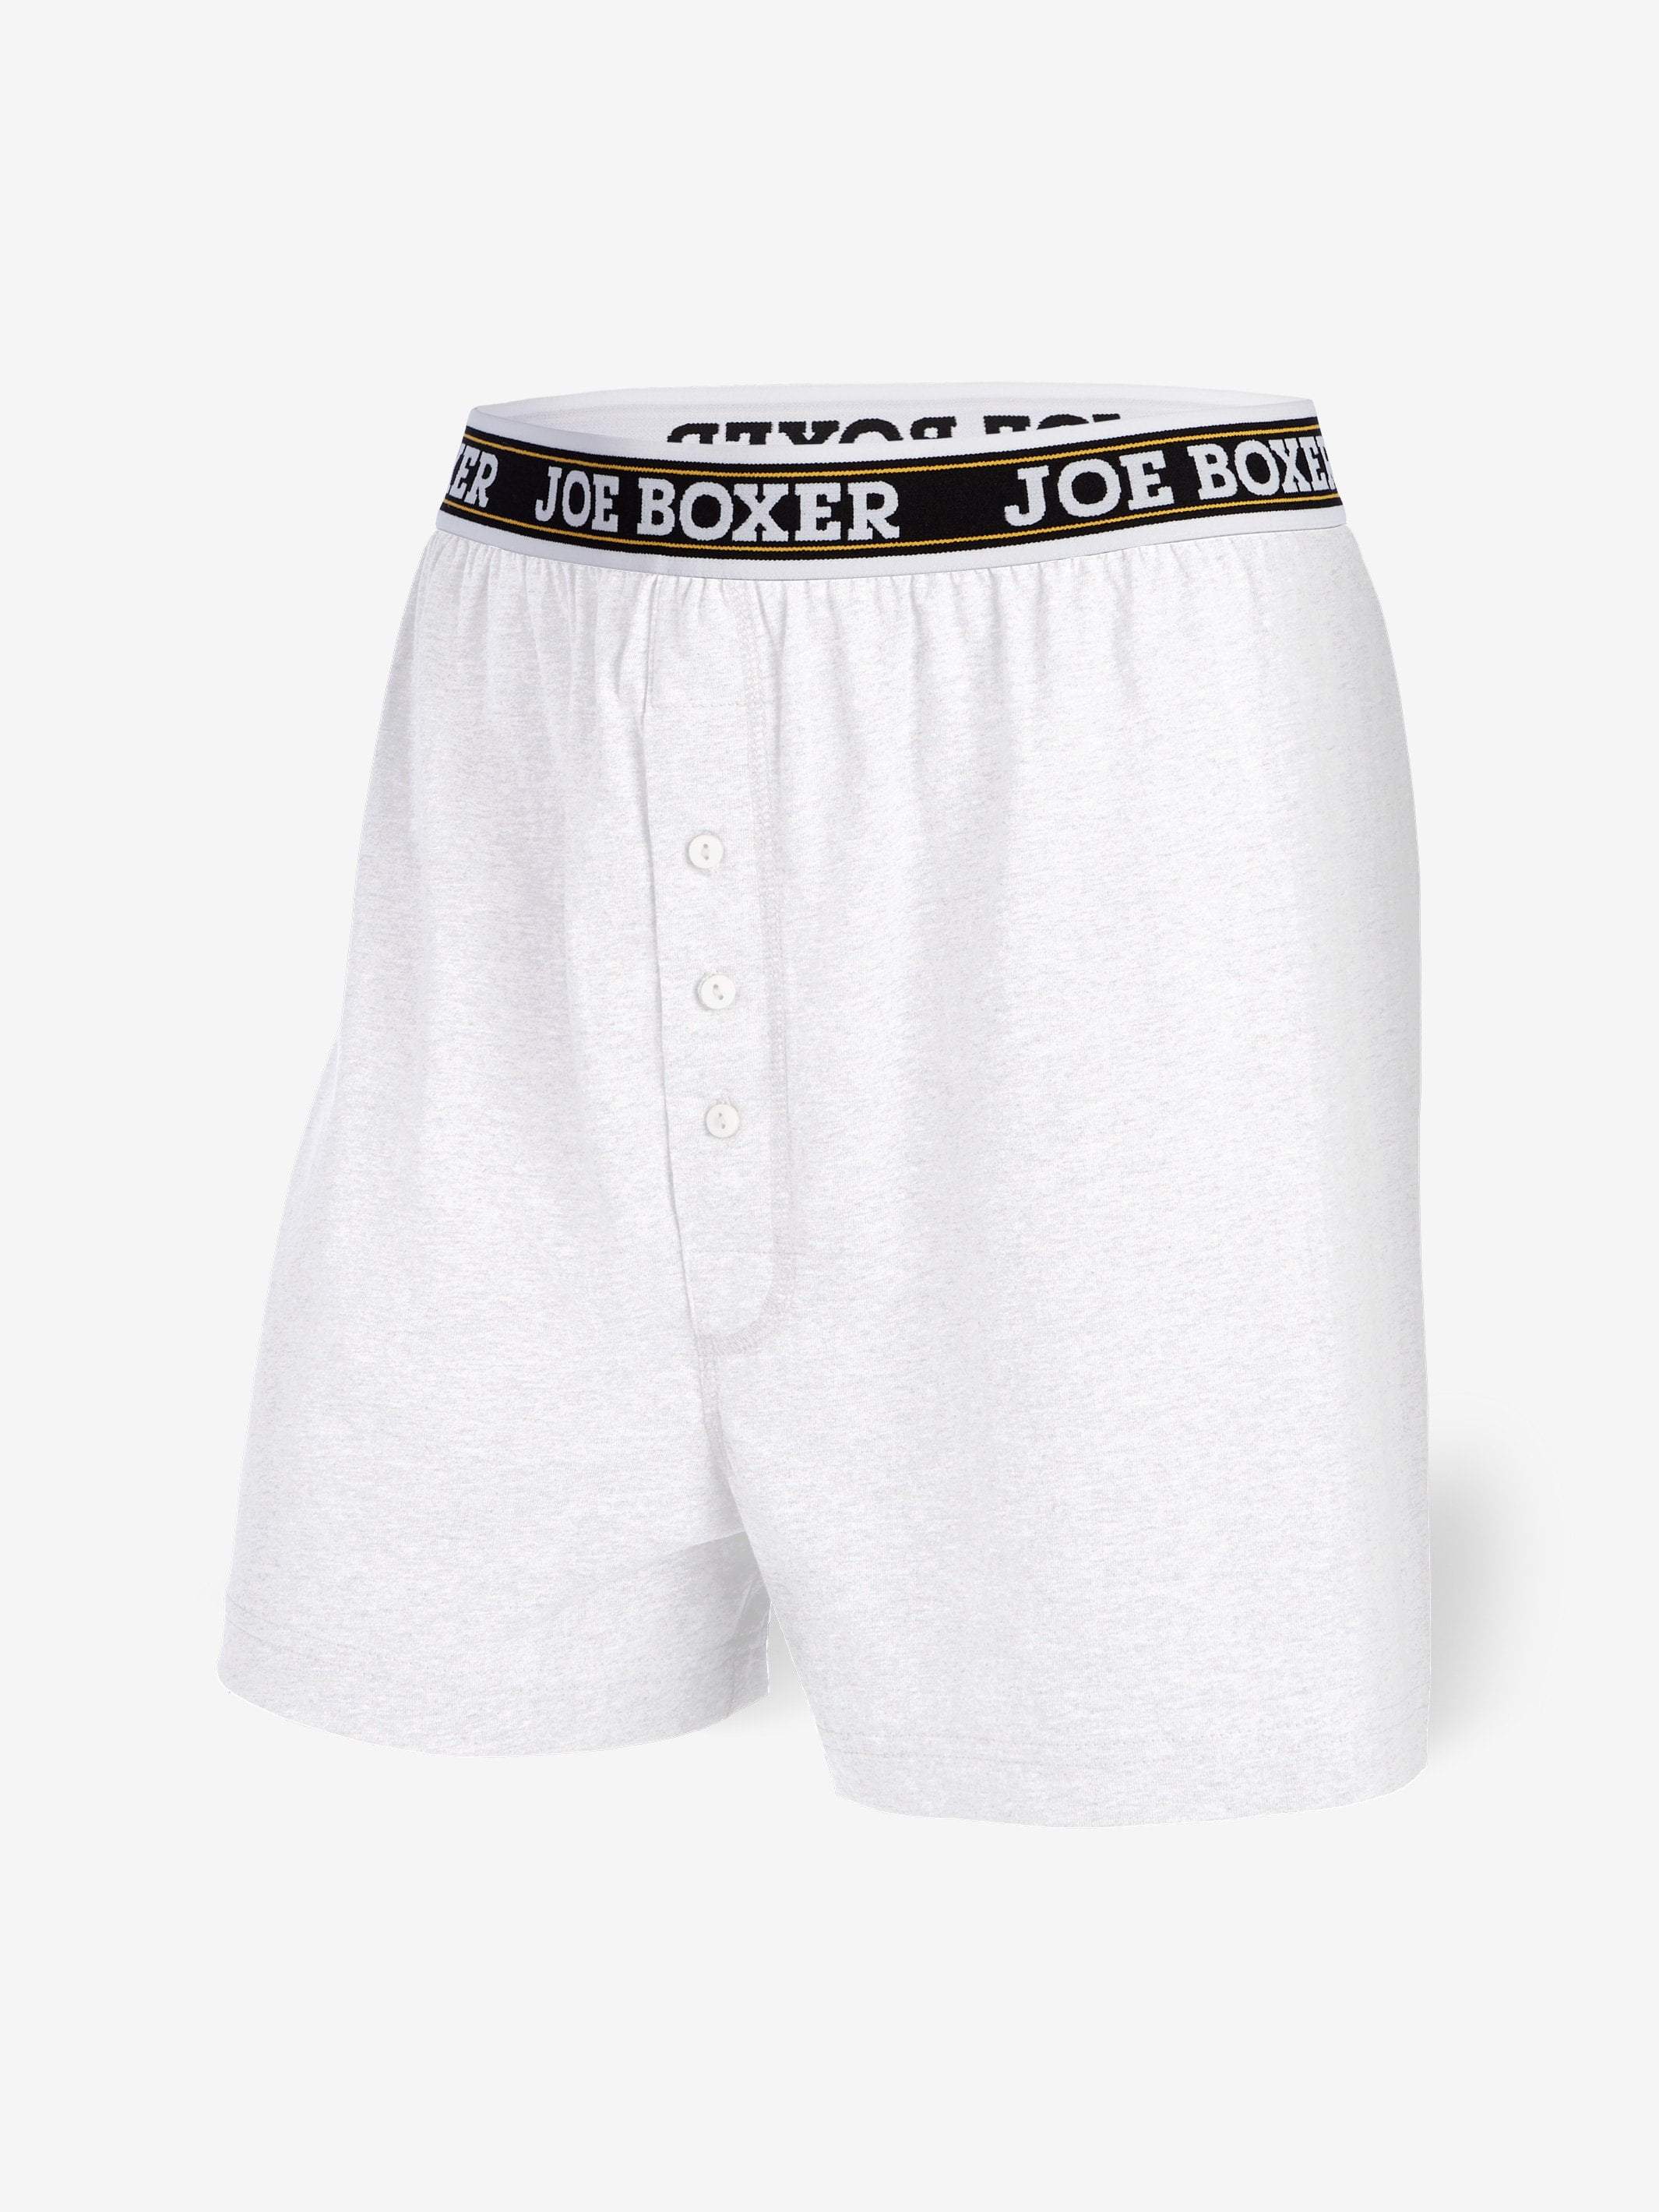 Joe Boxer Checkered Cotton Knit Boxers, 2 Pack